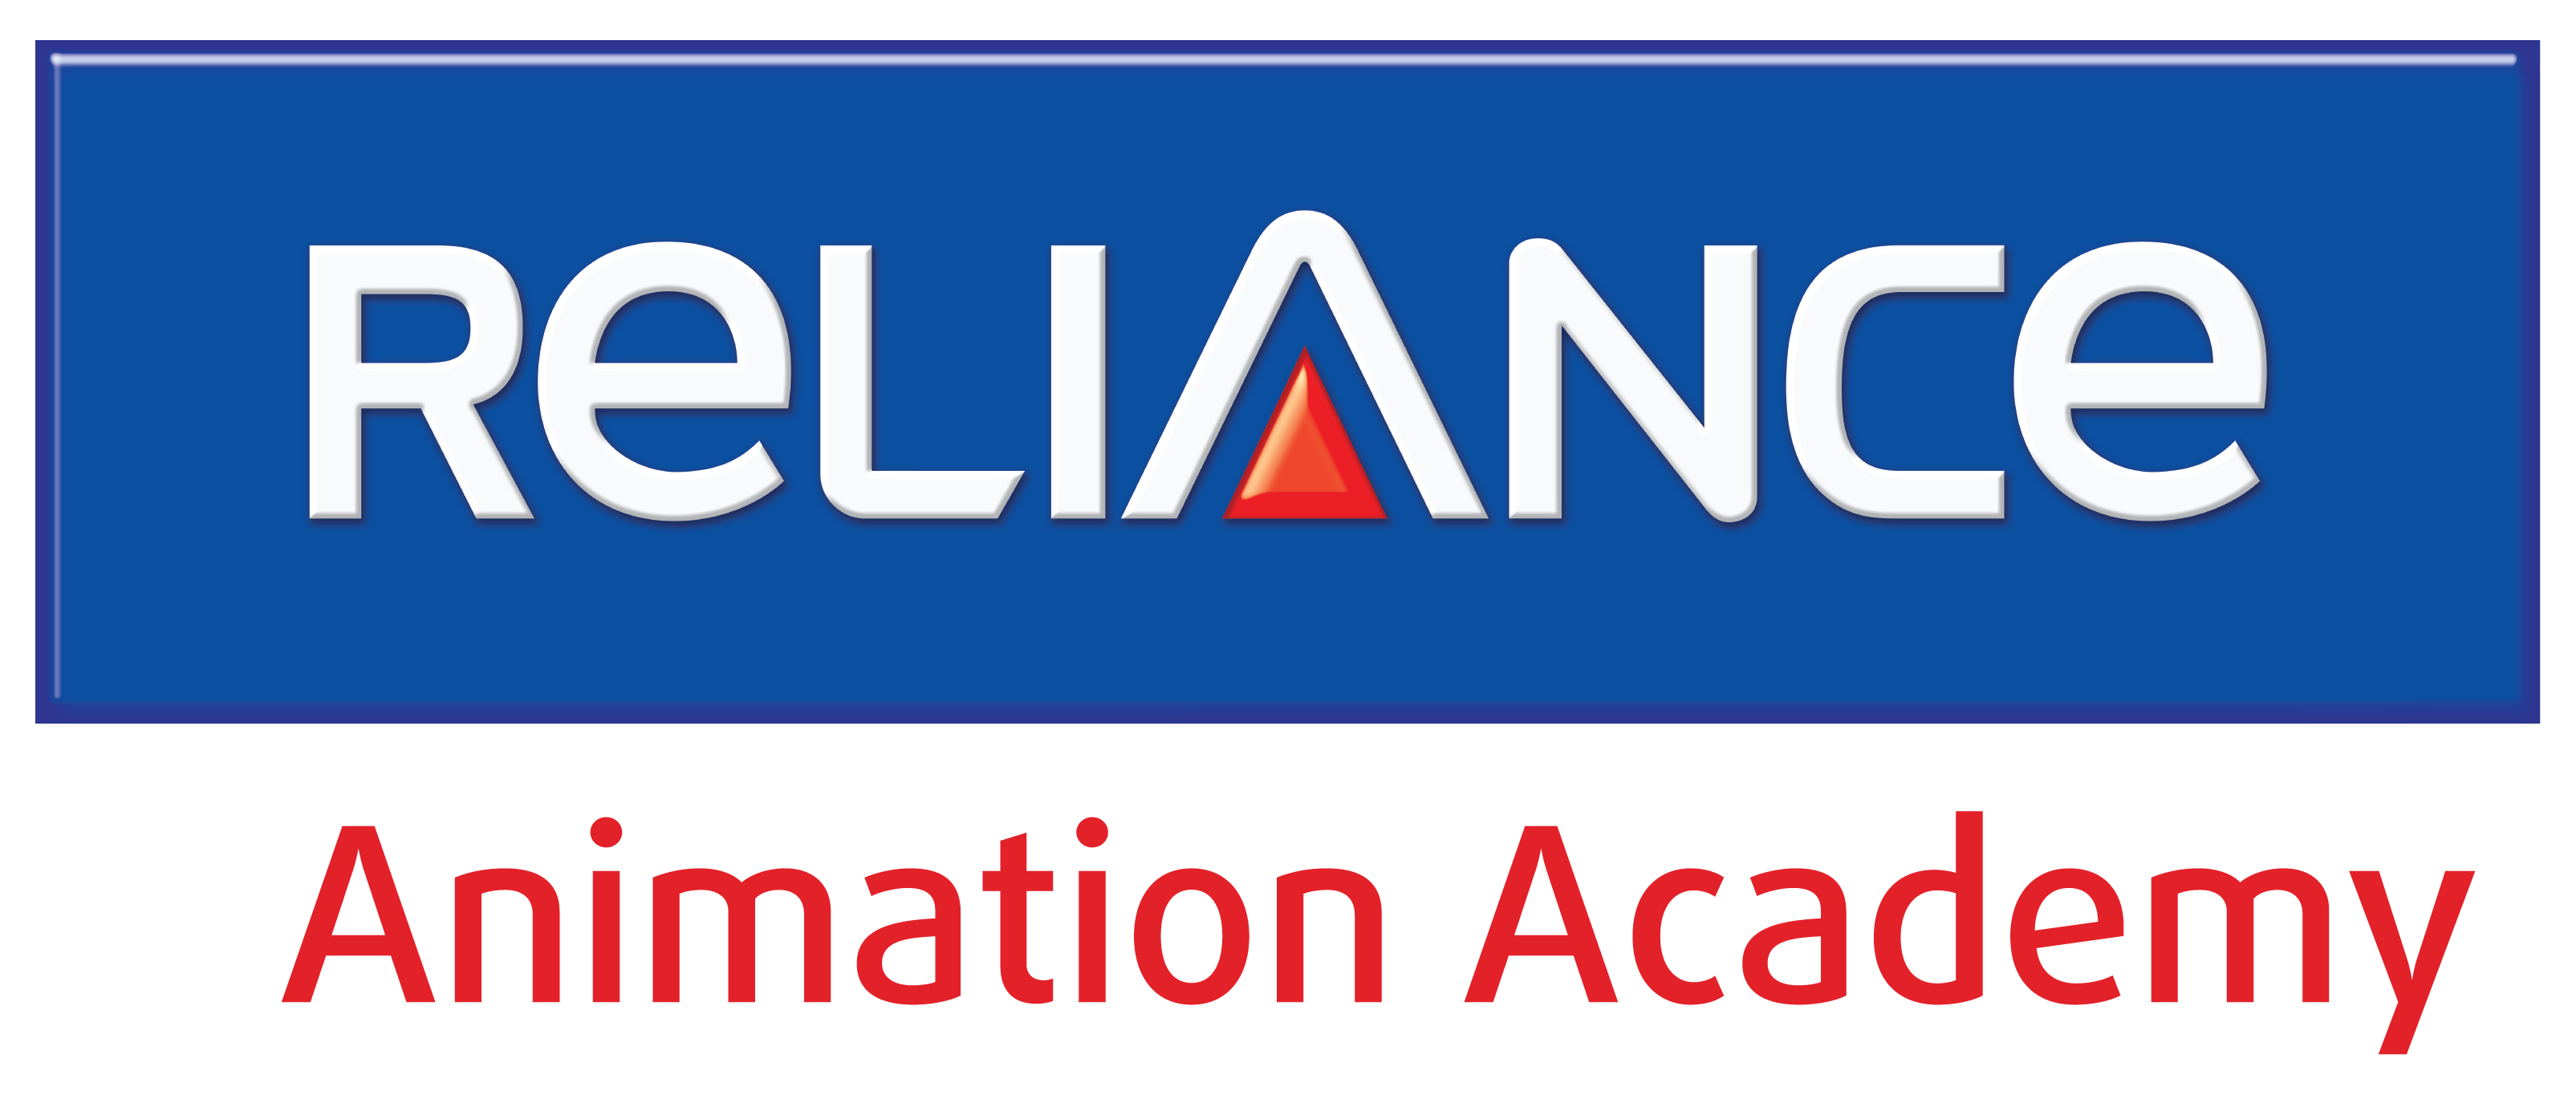 Reliance Animation Academy Chandigarh - Logo